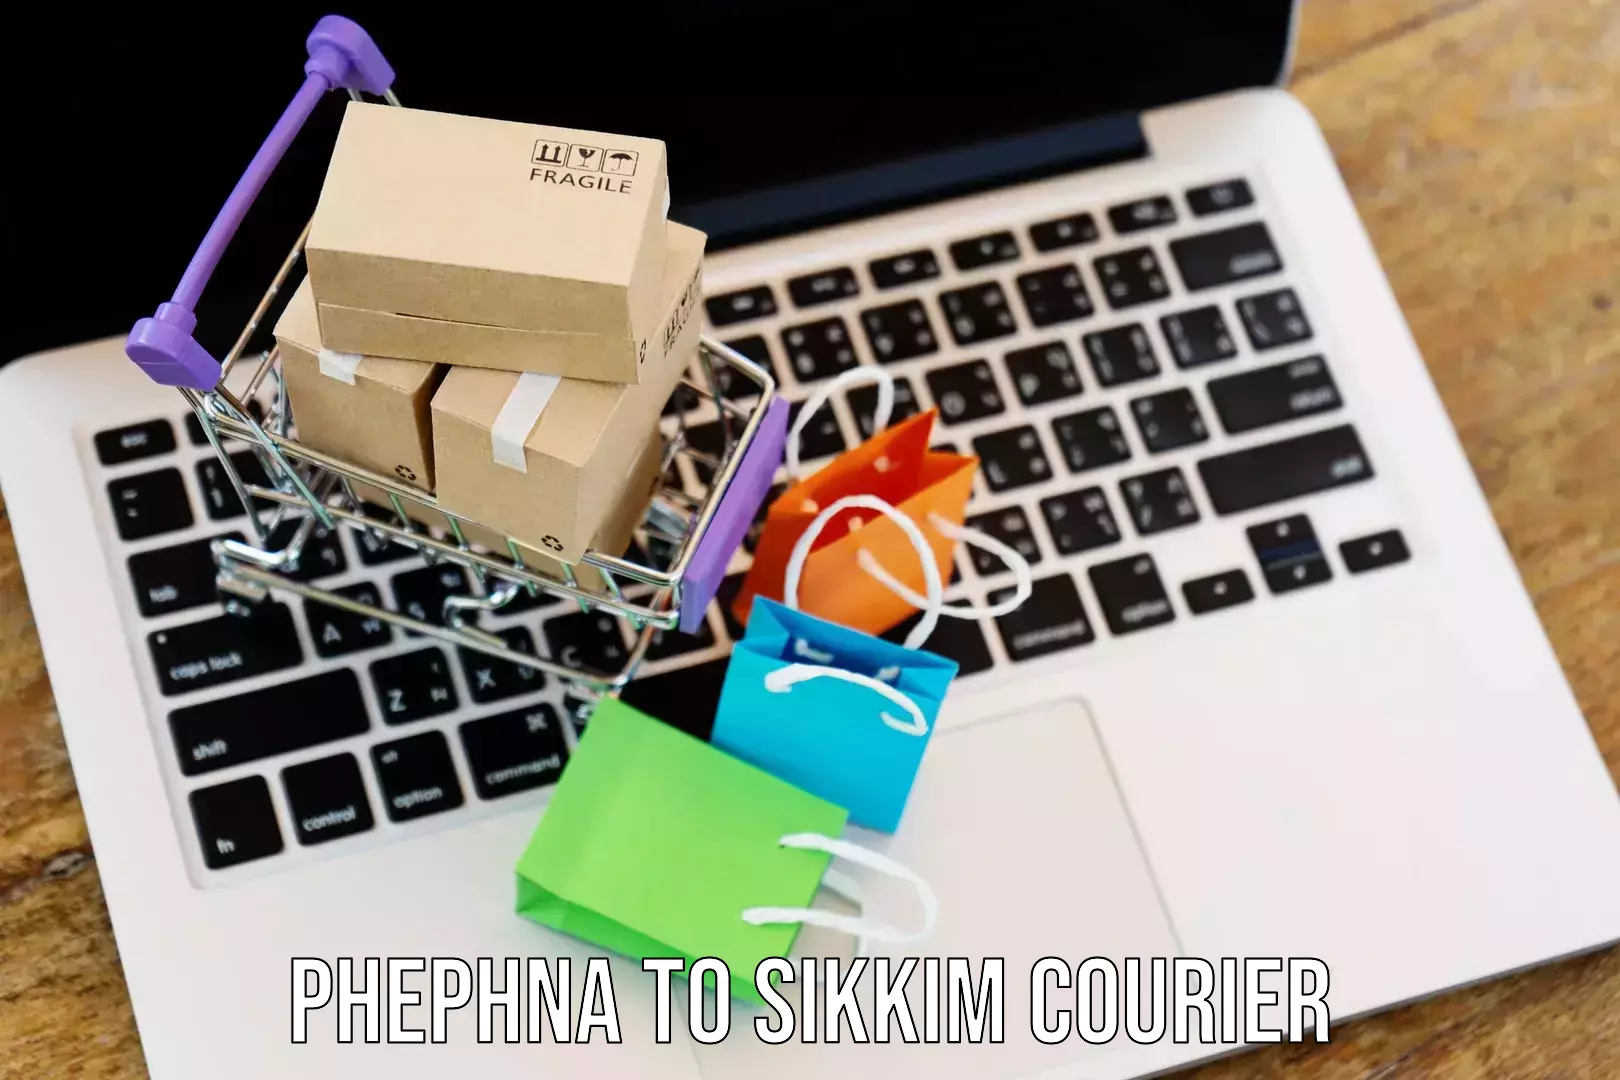 Express delivery capabilities Phephna to Singtam